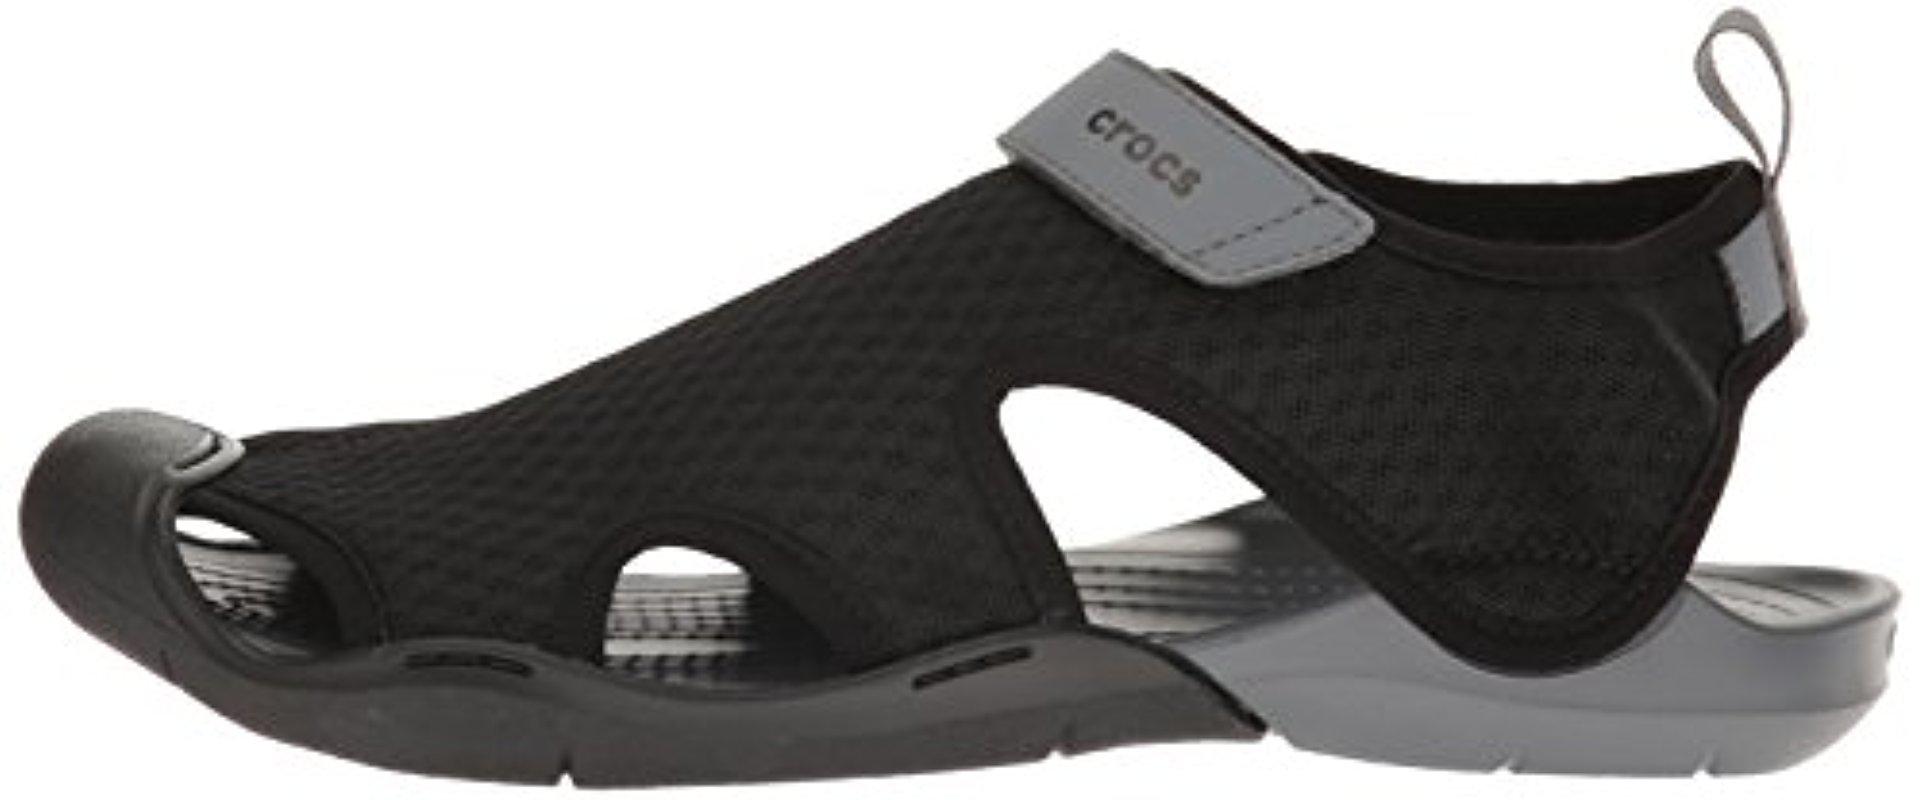 Crocs™ Swiftwater Mesh Sandal in Black 